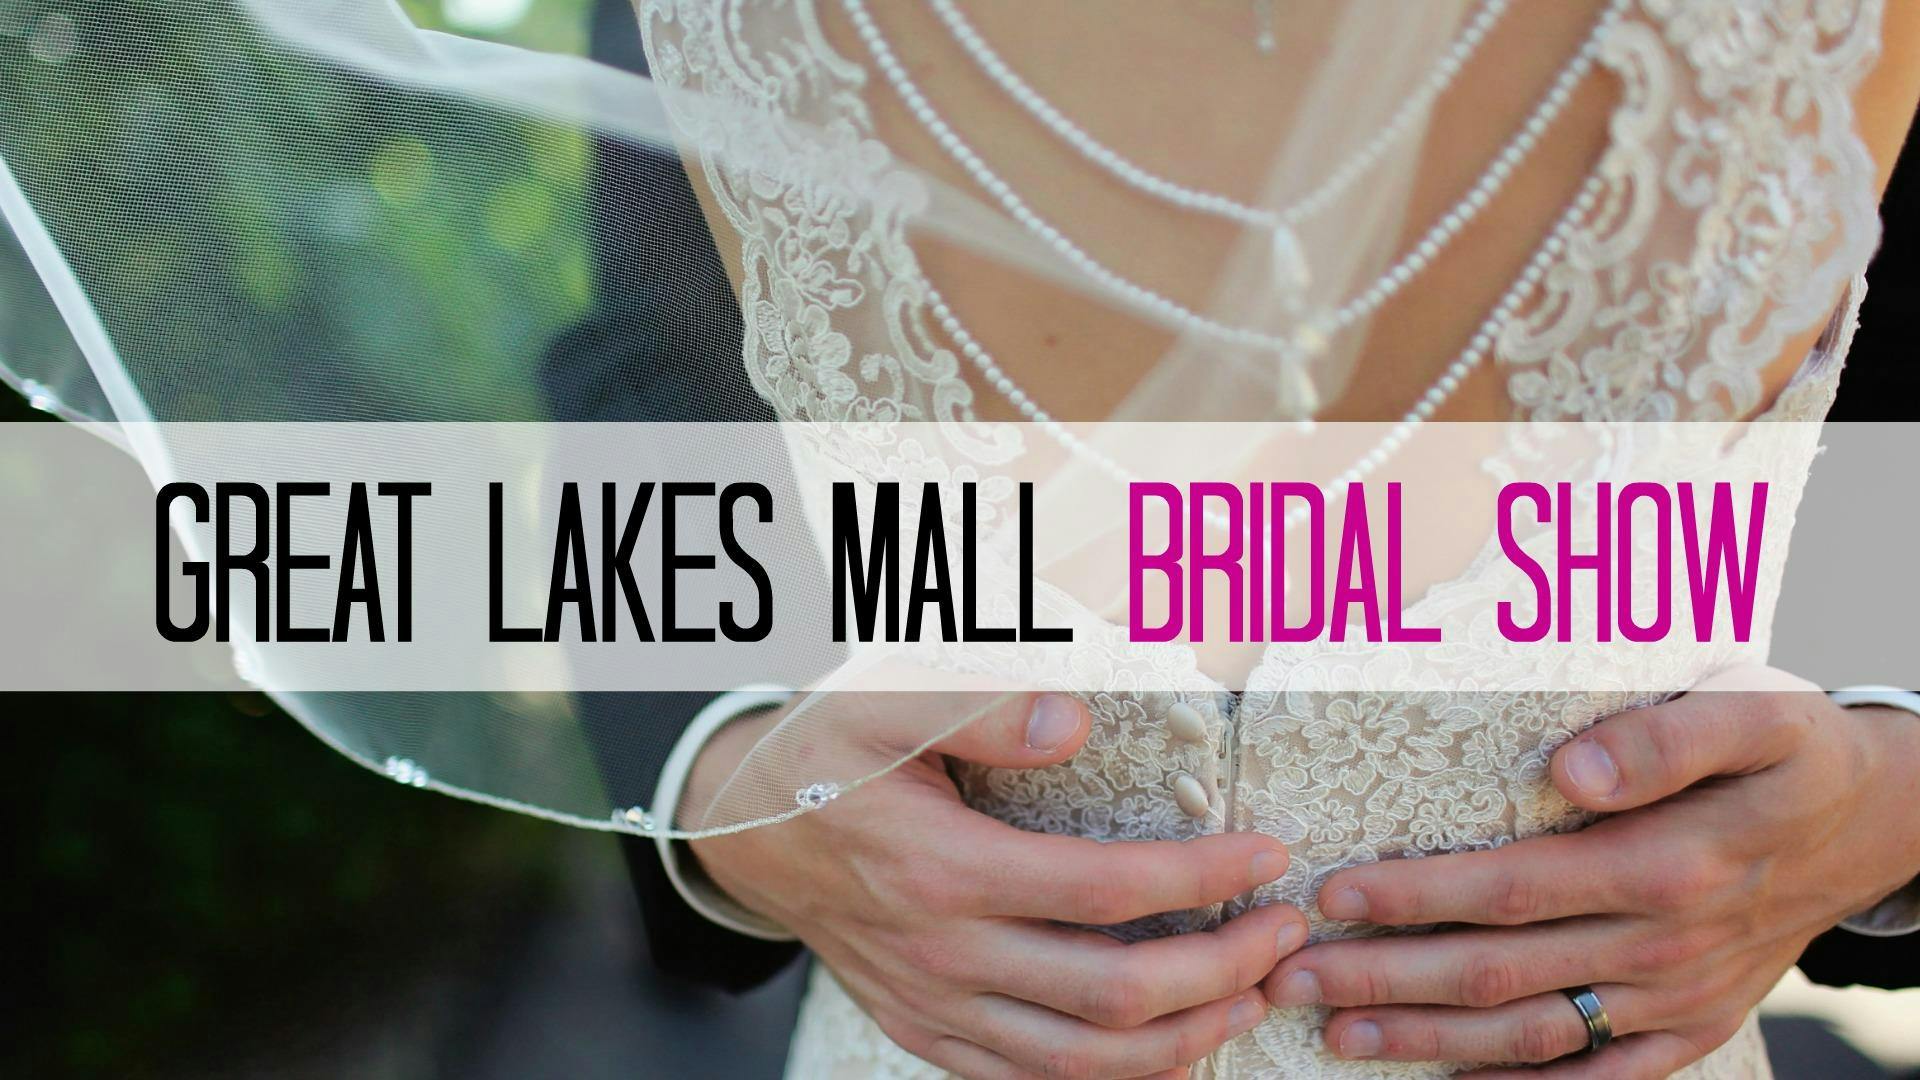 Great Lakes Mall Bridal Show